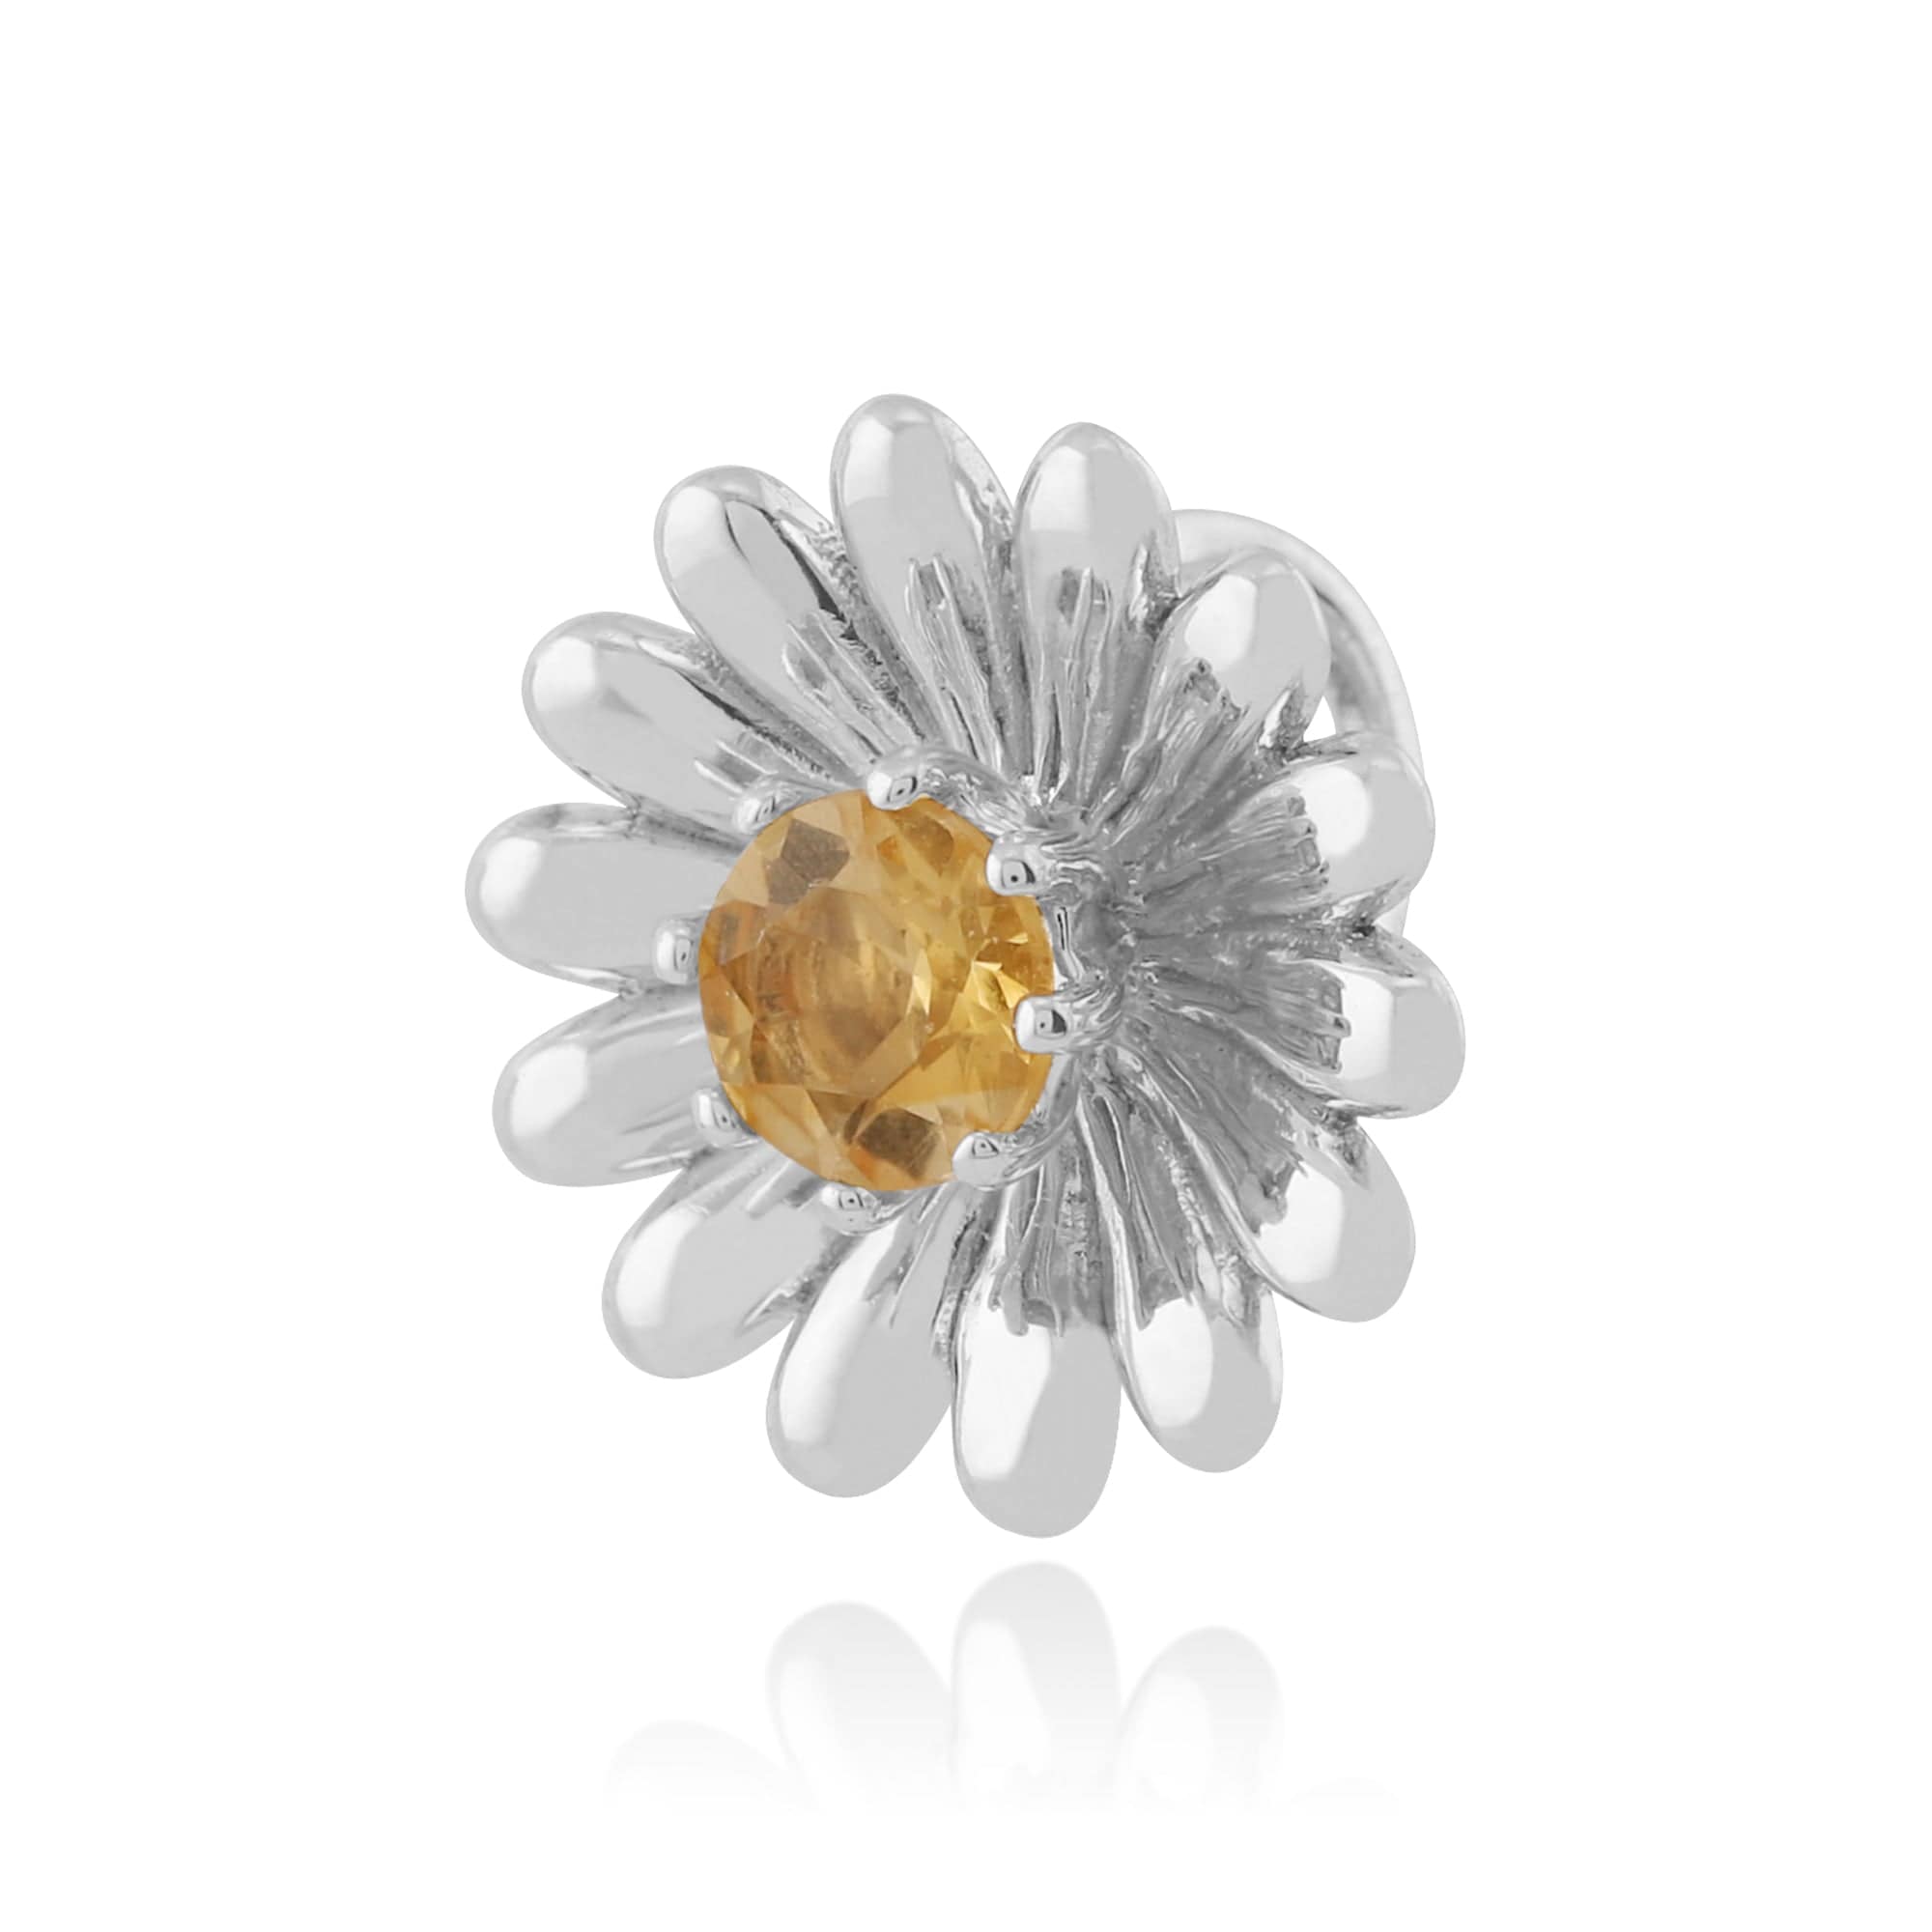 Floral Round Citrine Daisy Flower Single Stone Pendant in 925 Sterling Silver - Gemondo